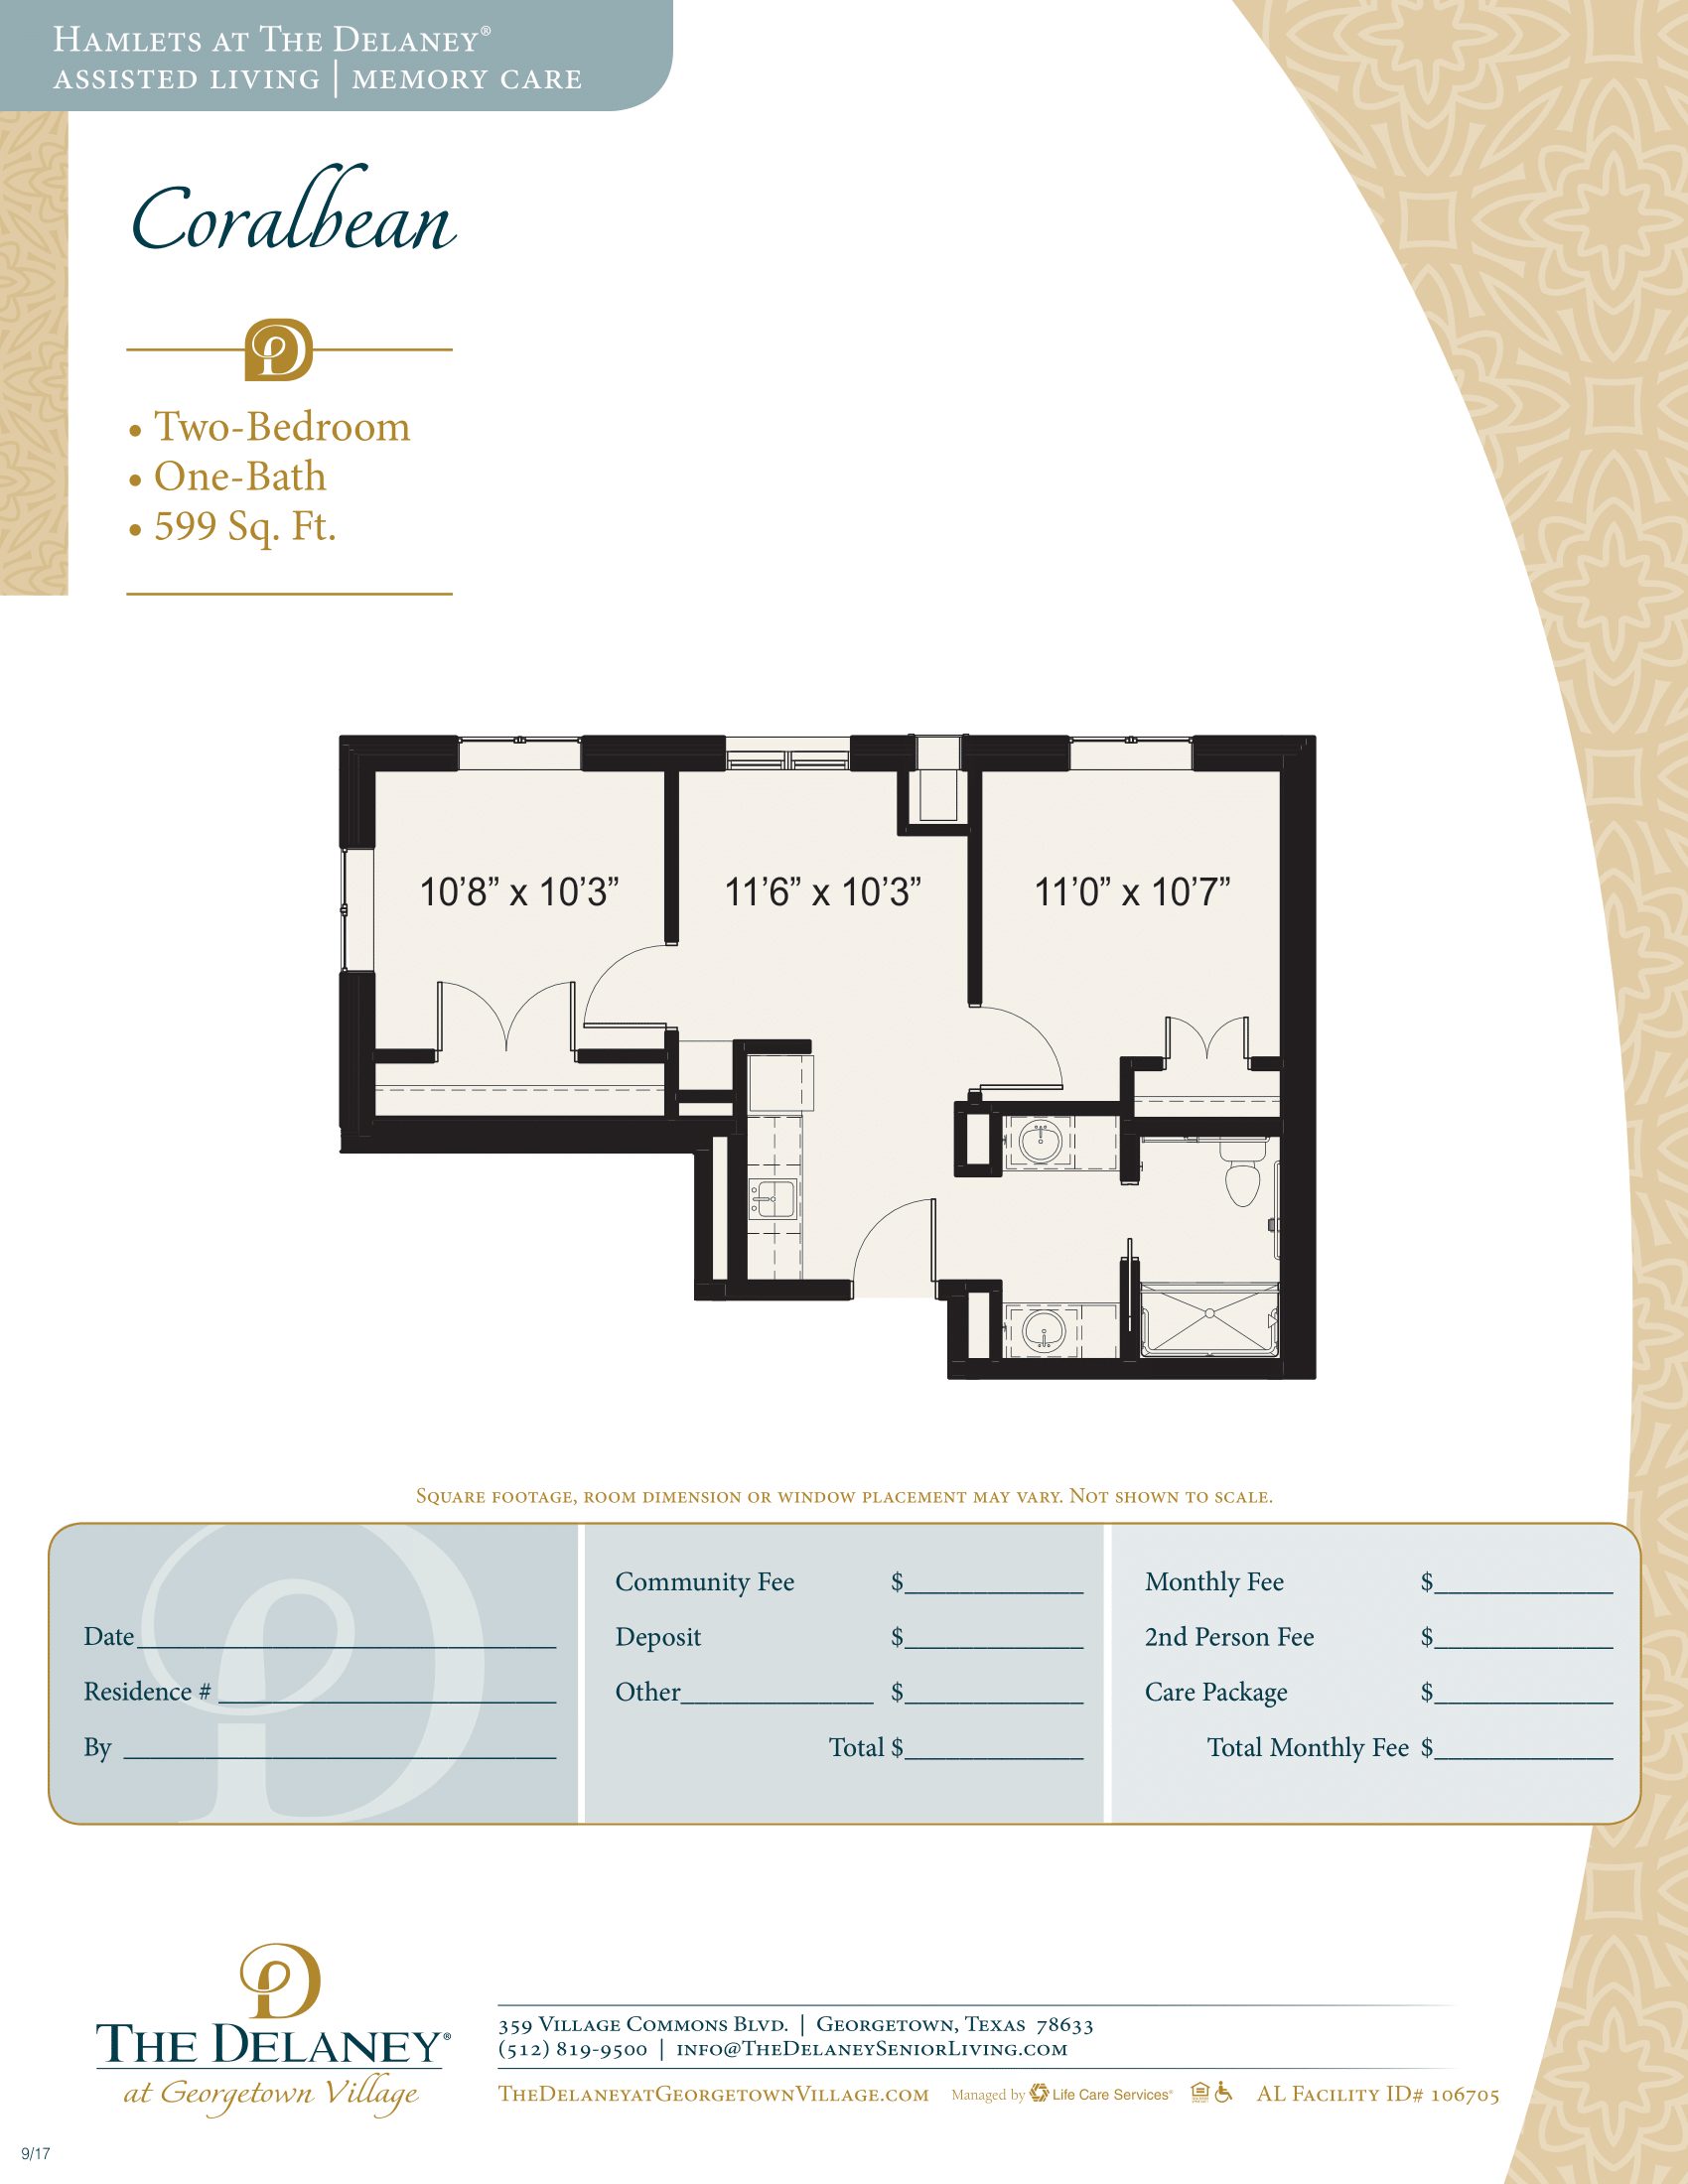 Senior Living Floor Plans & Pricing The Delaney at